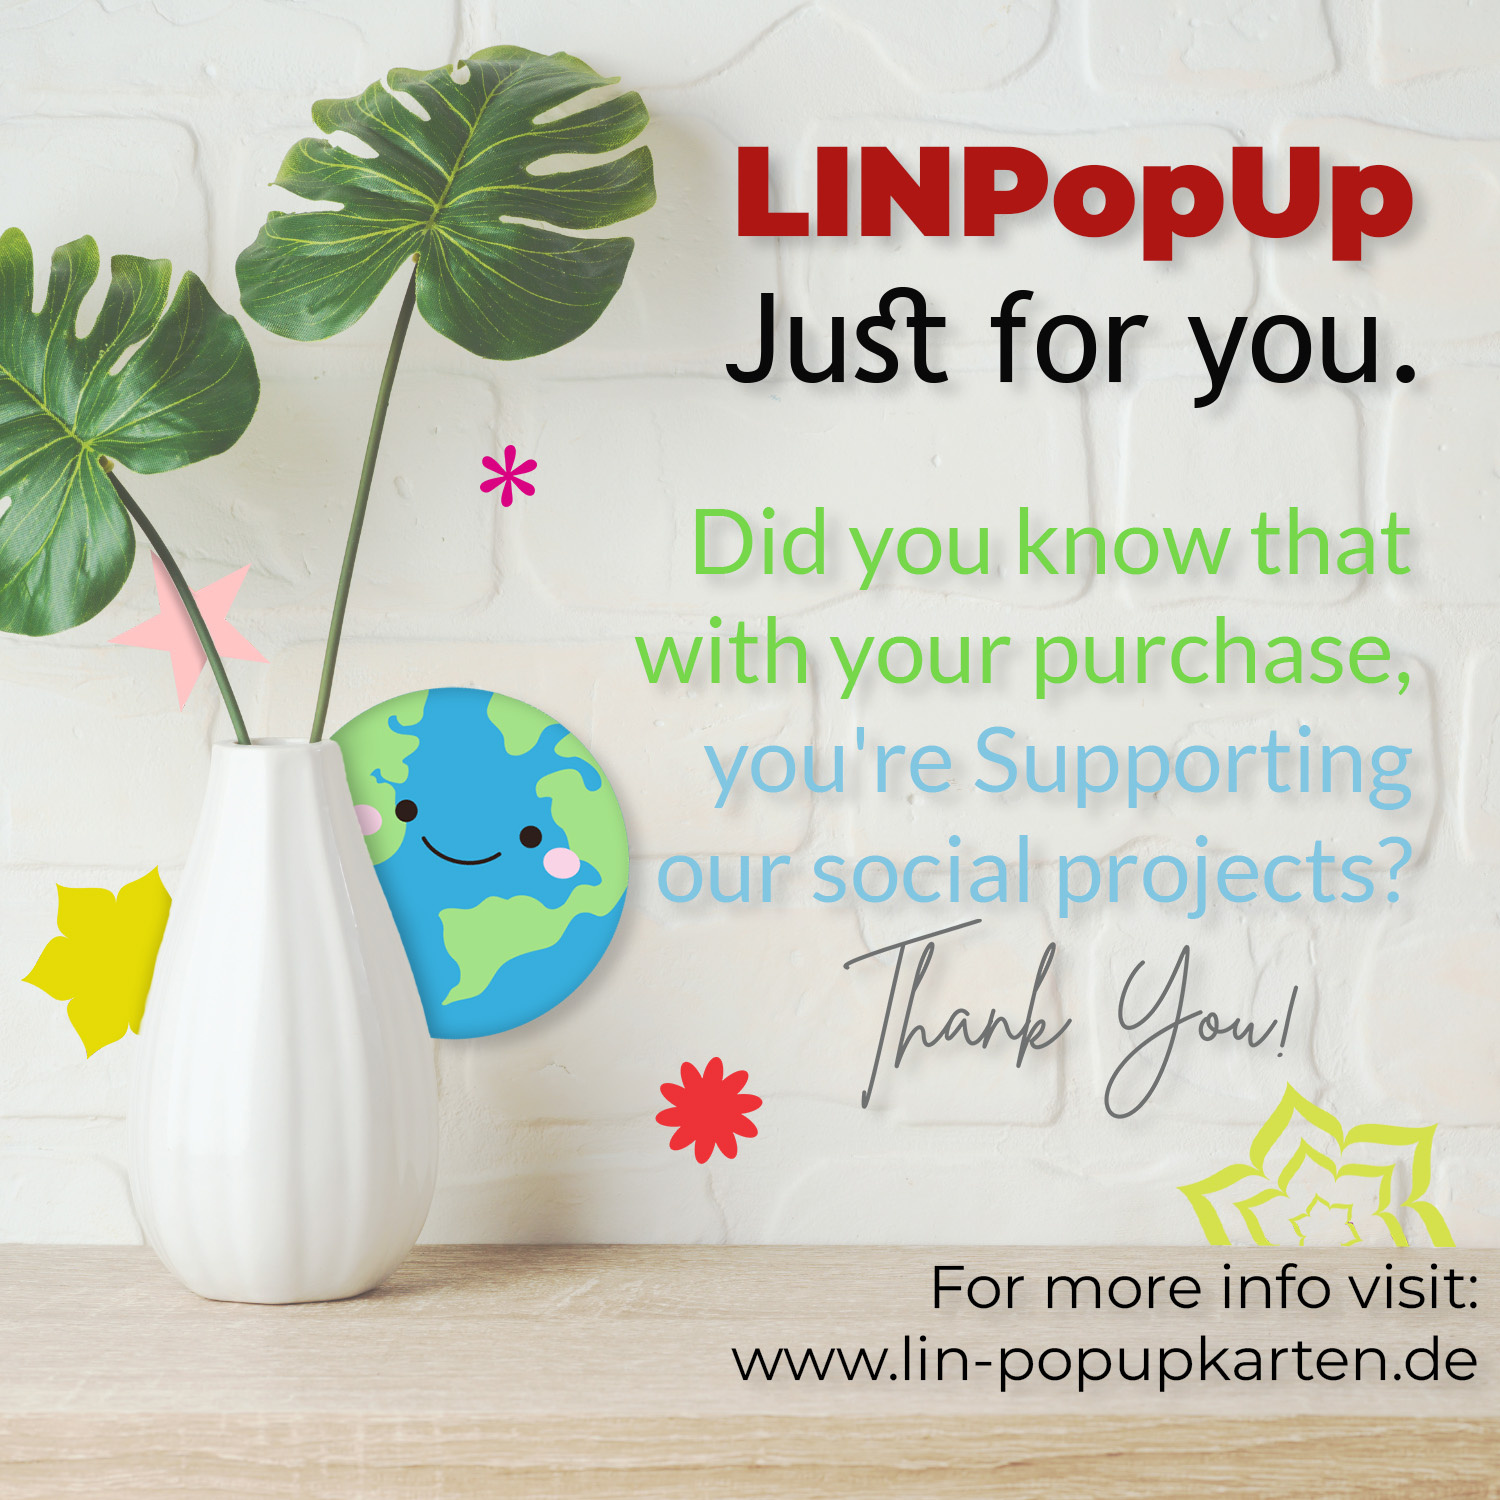 LINPOPUP Pop Up 3D Card, Greeting Card, Travel Voucher, Elbphilharmonie, LIN17385, LINPopUp®, N258